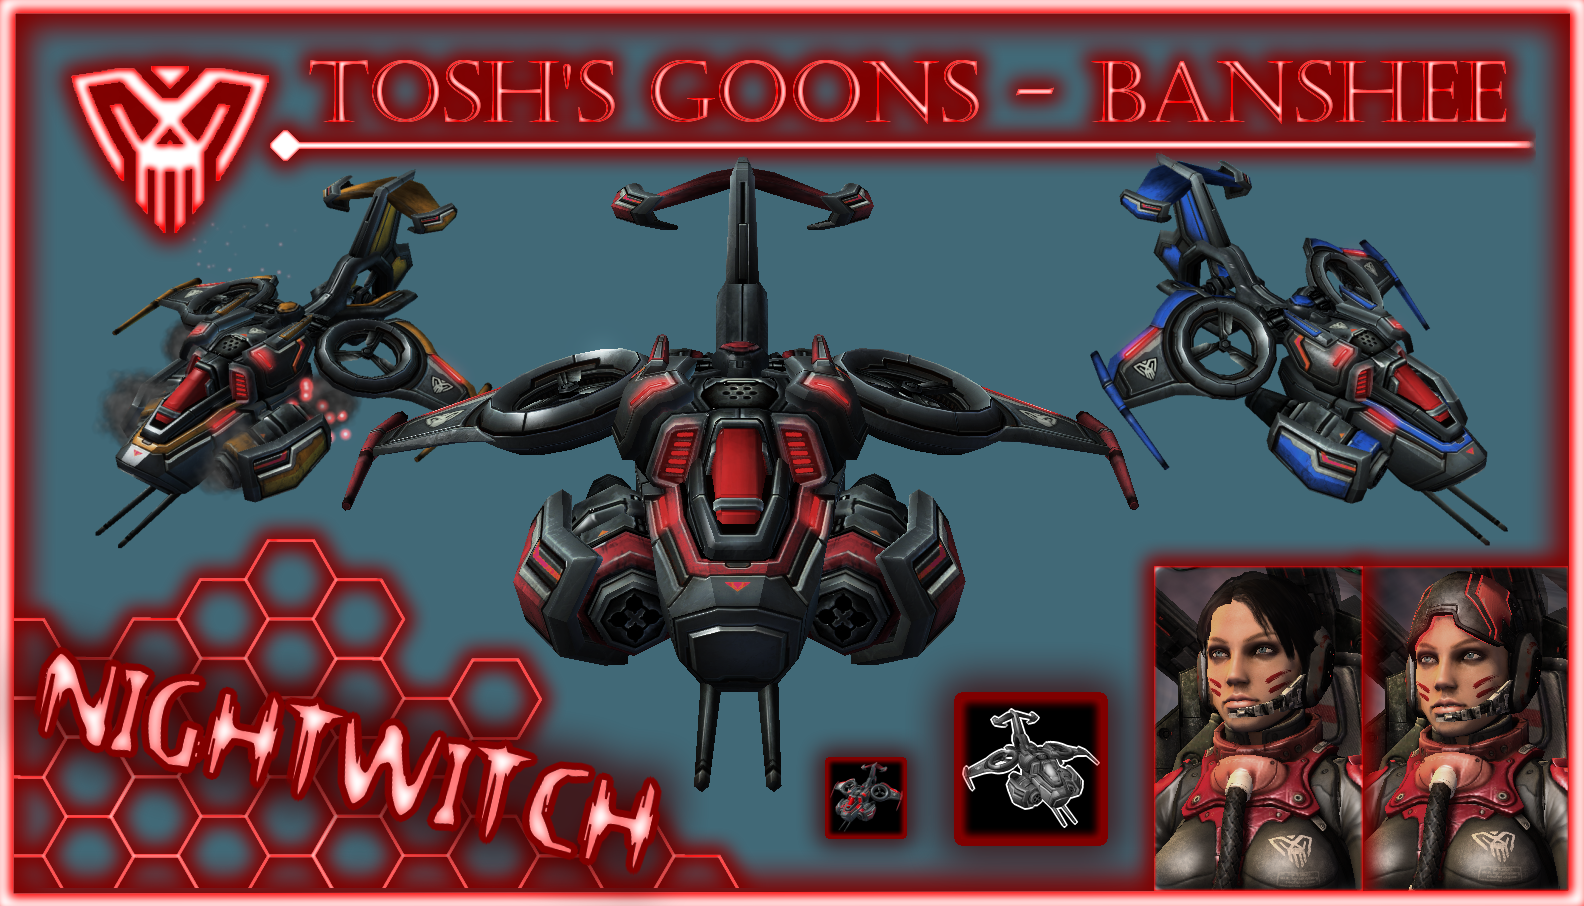 NightWitch - Tosh's Goons Banshee